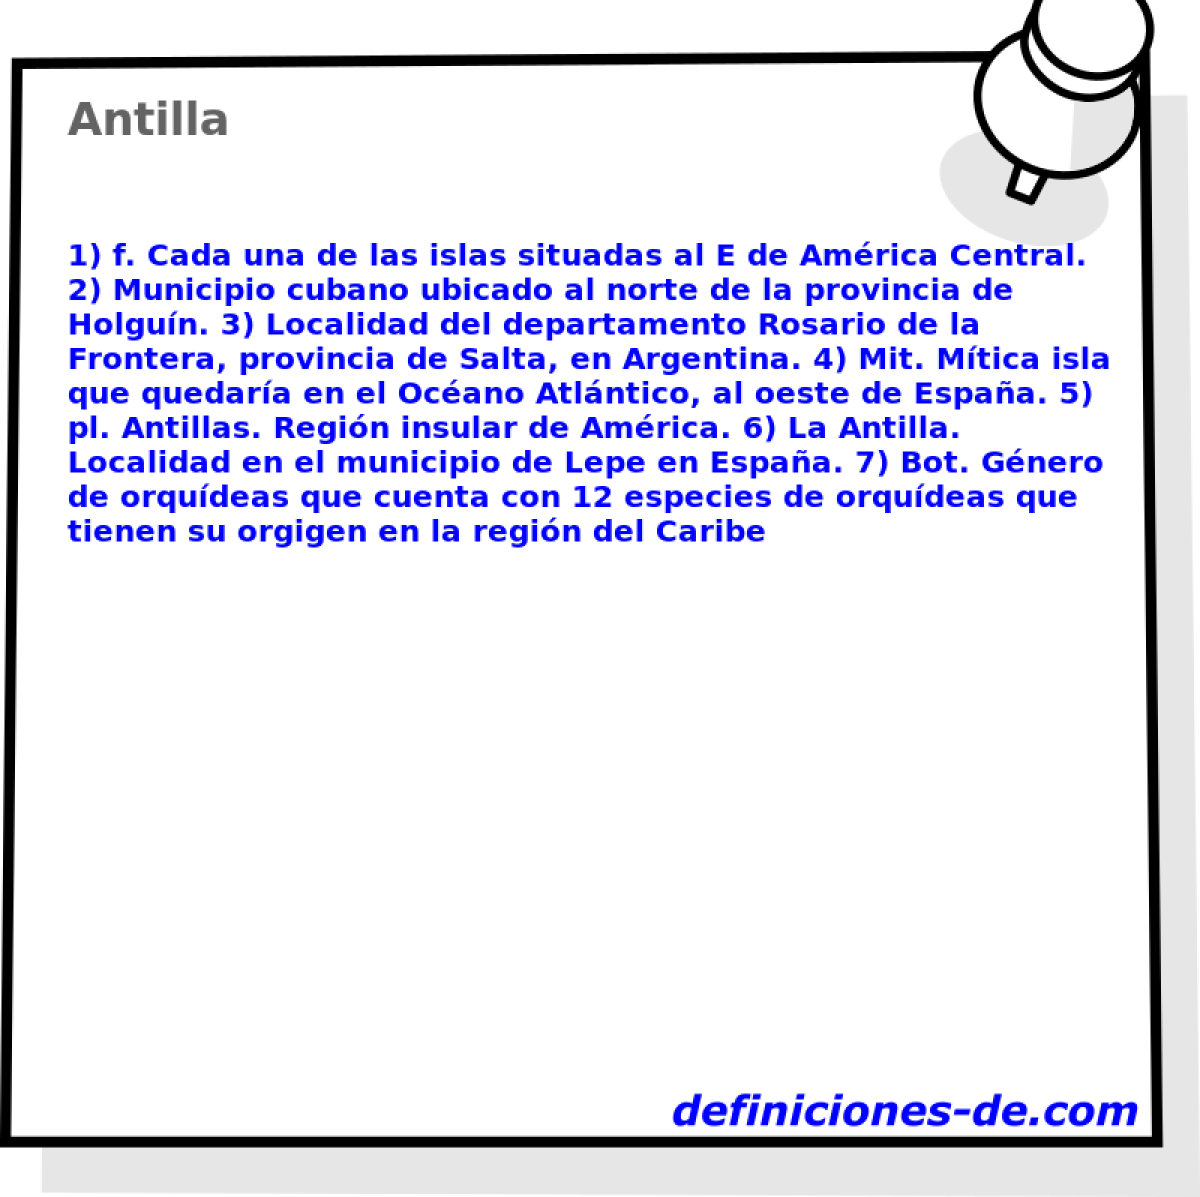 Antilla 